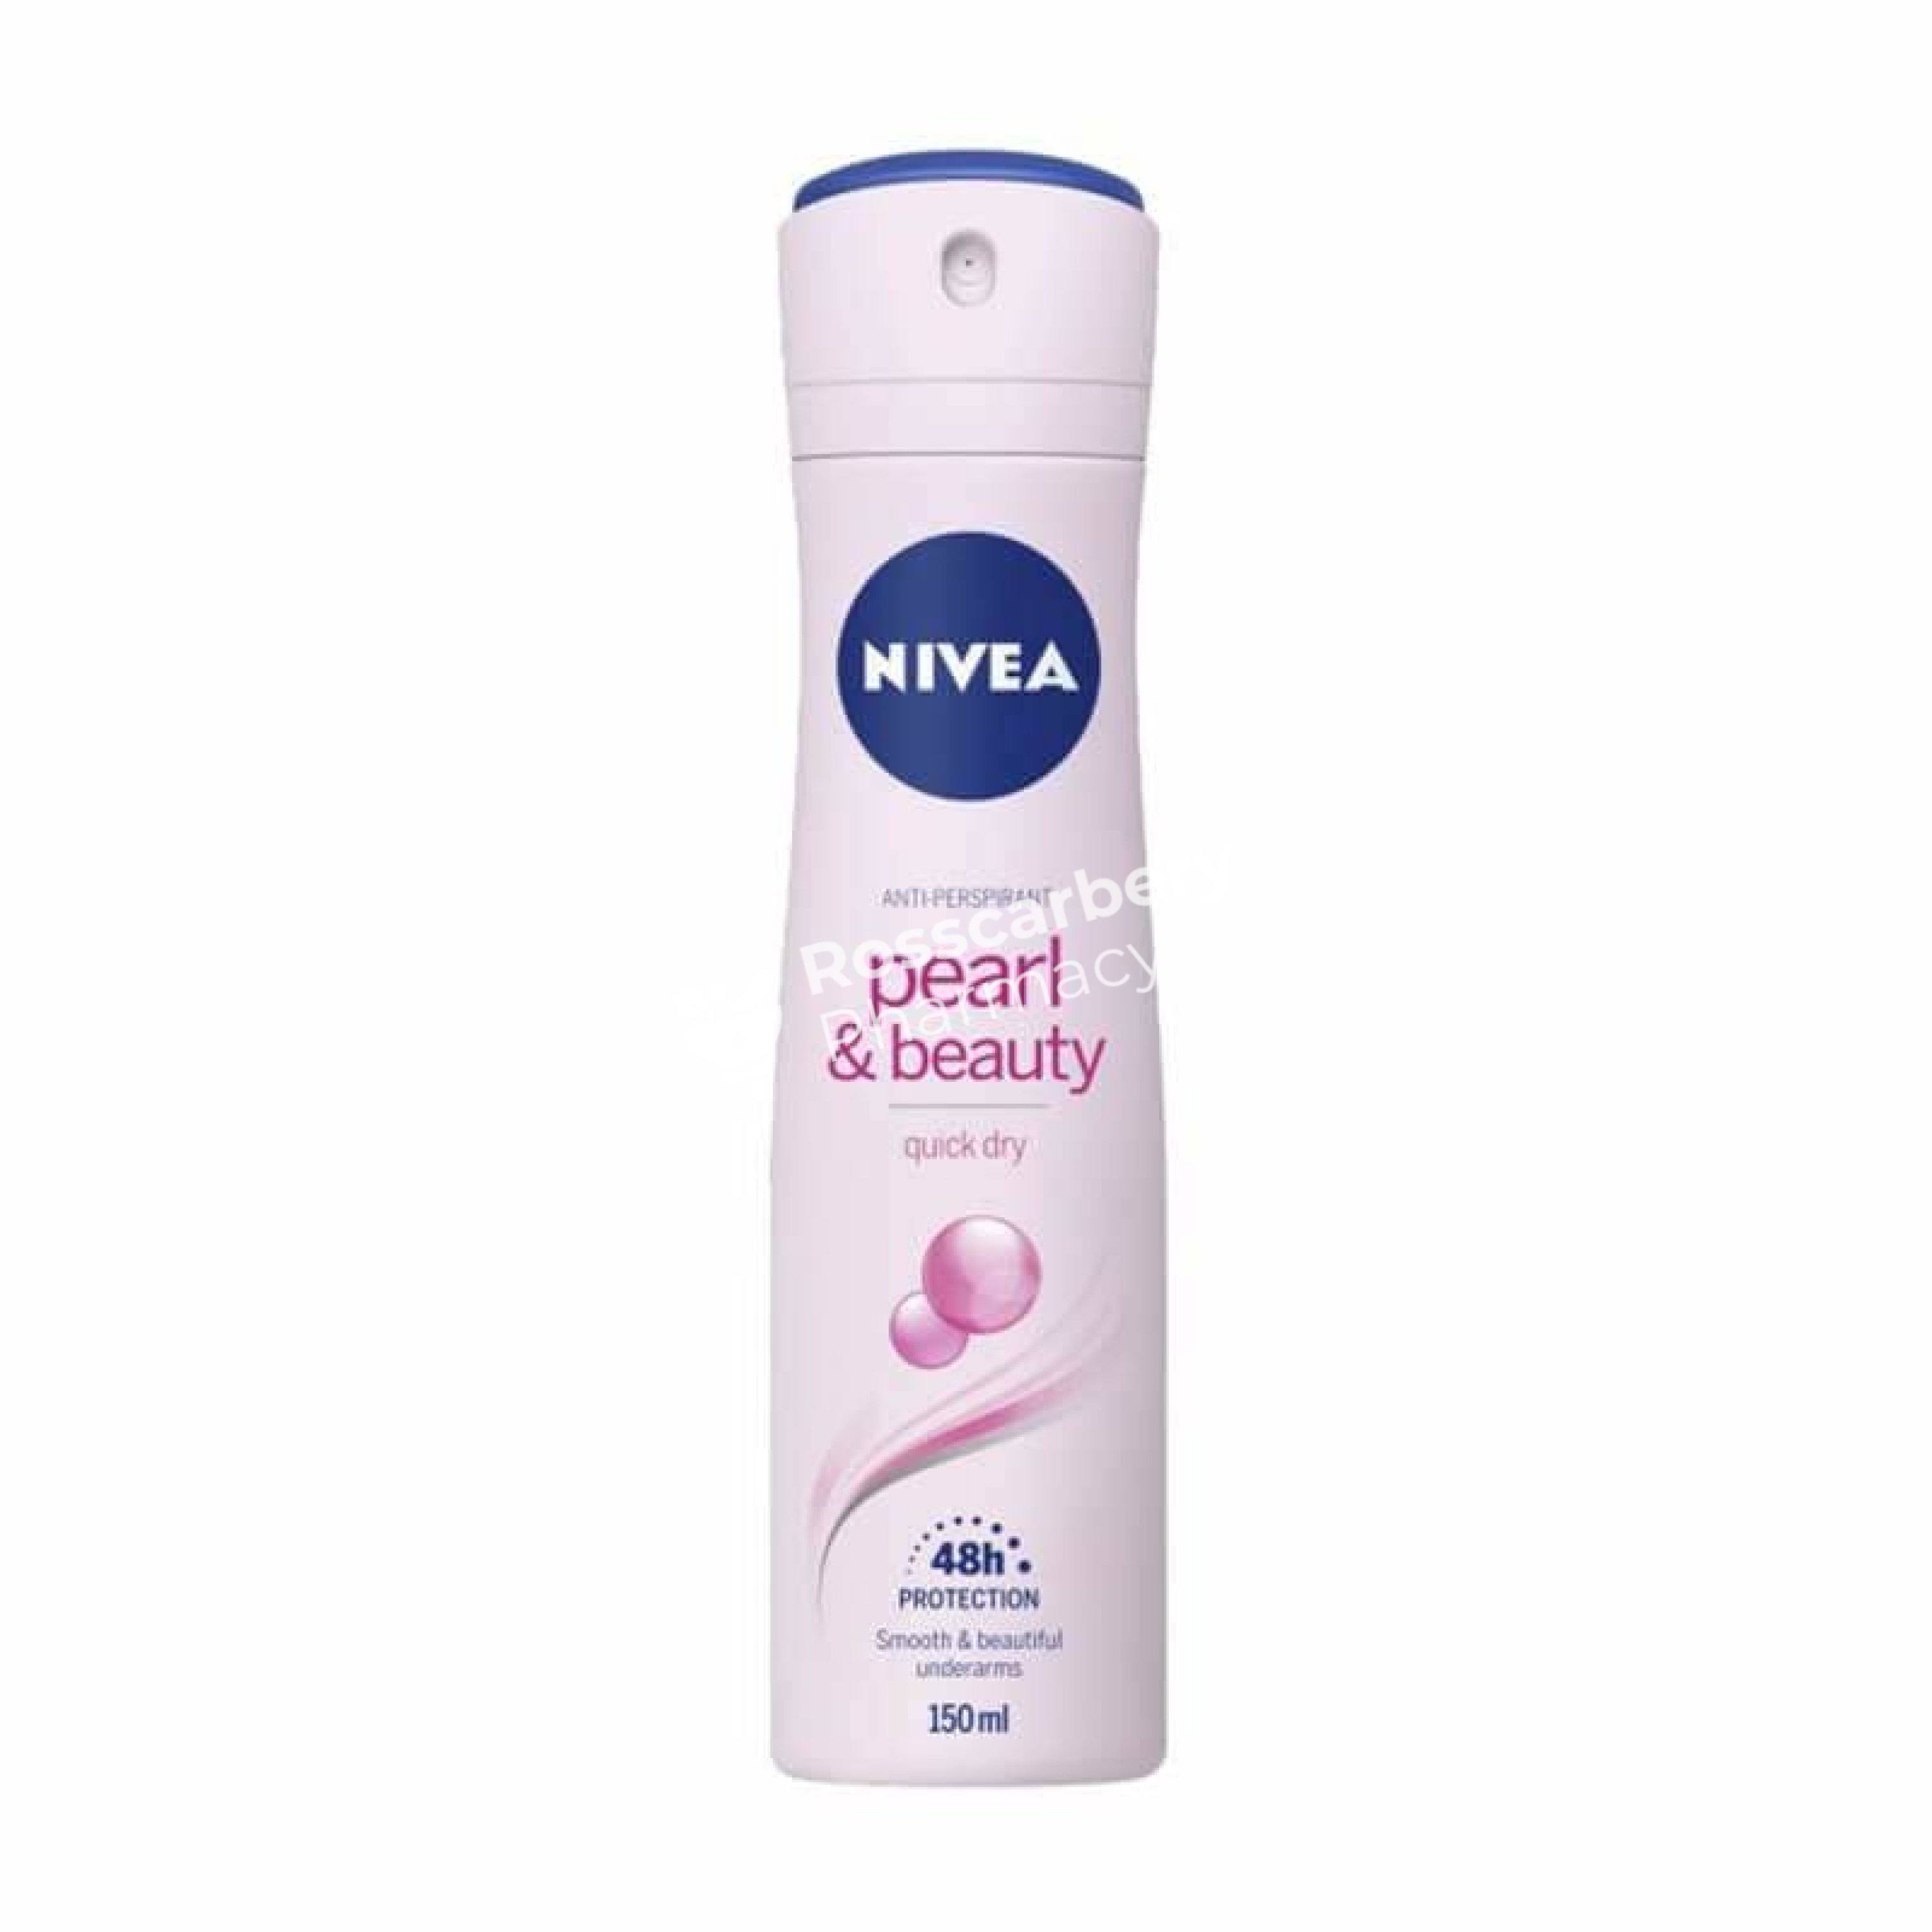 Nivea Anti Perspirant Deodorant Spray - Pearl & Beauty, 150ml